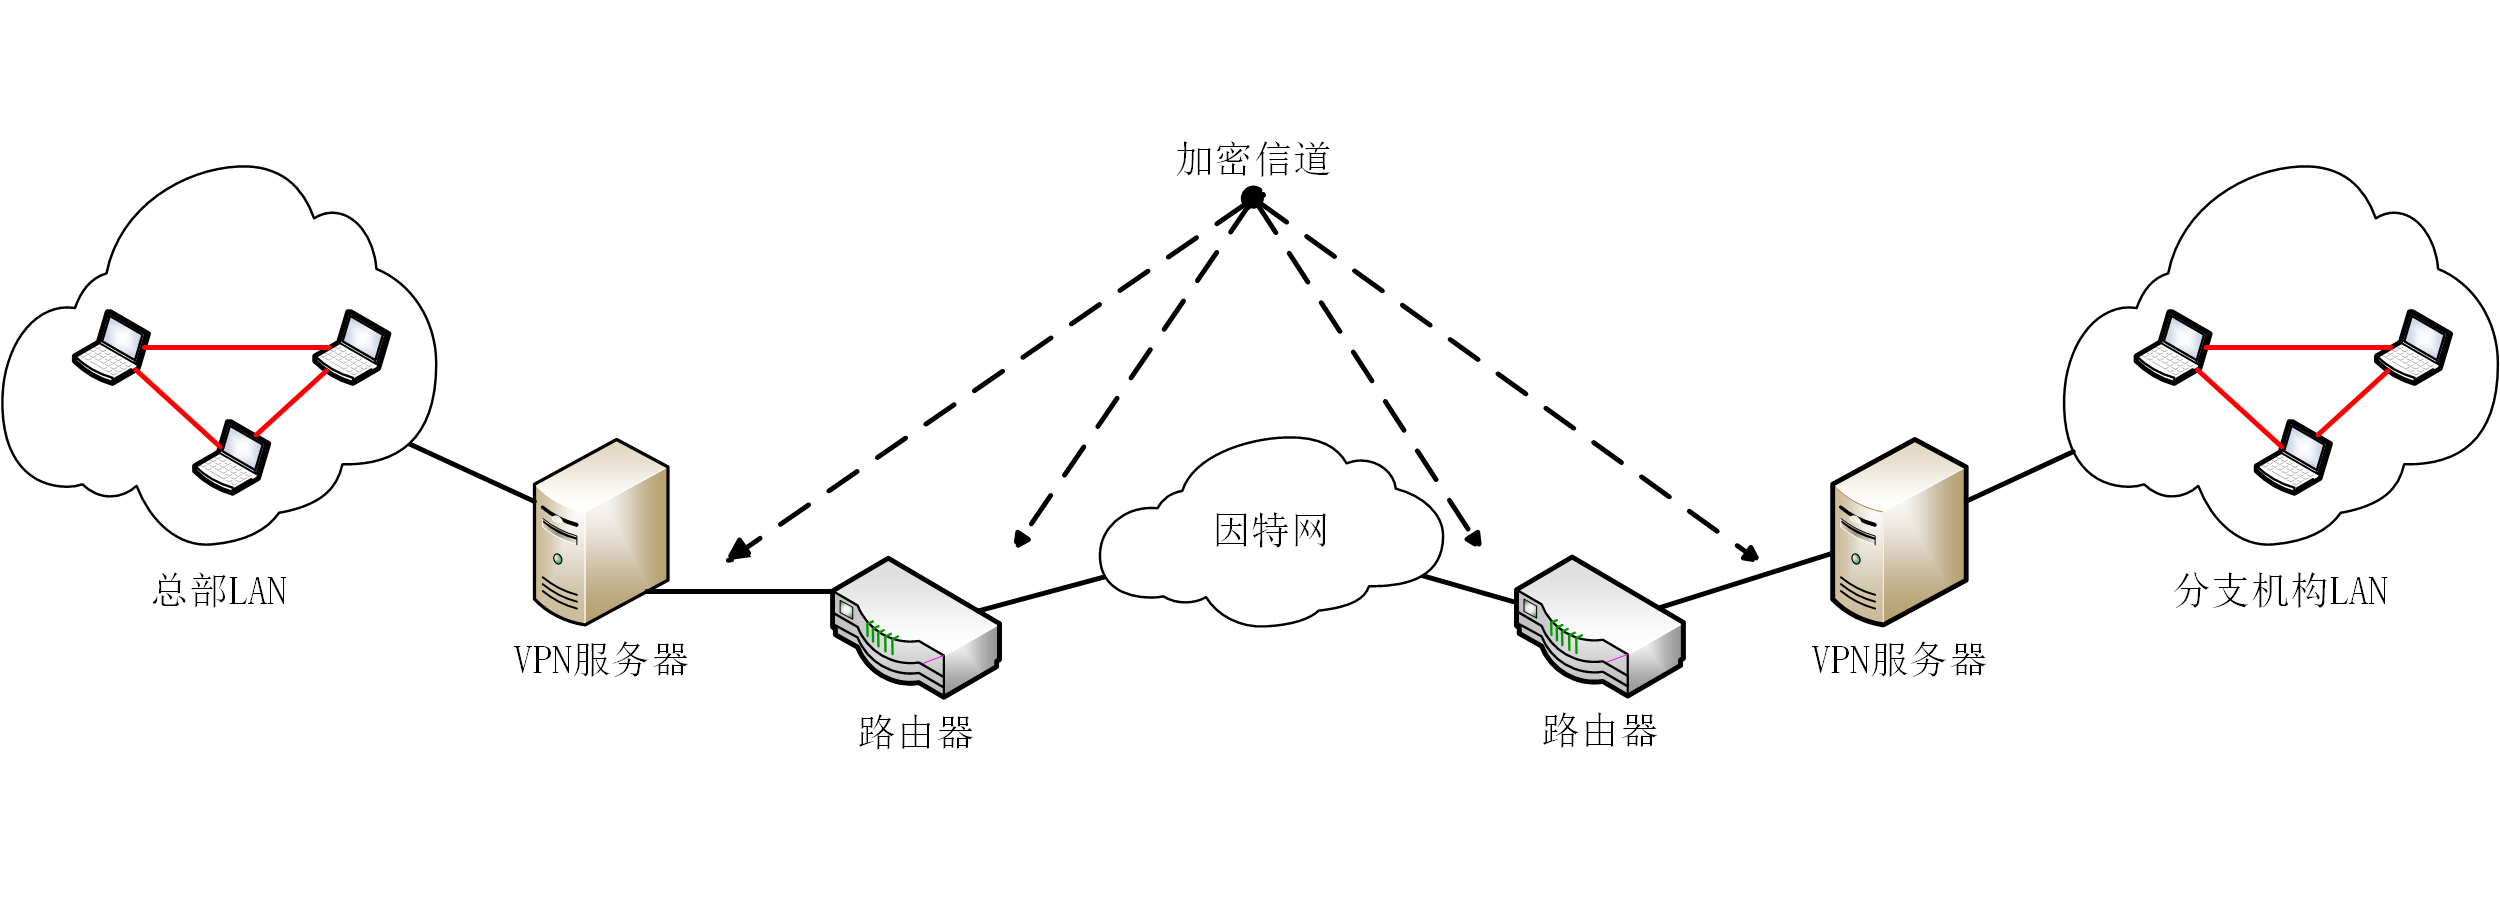 图 3-8 Intranet VPN